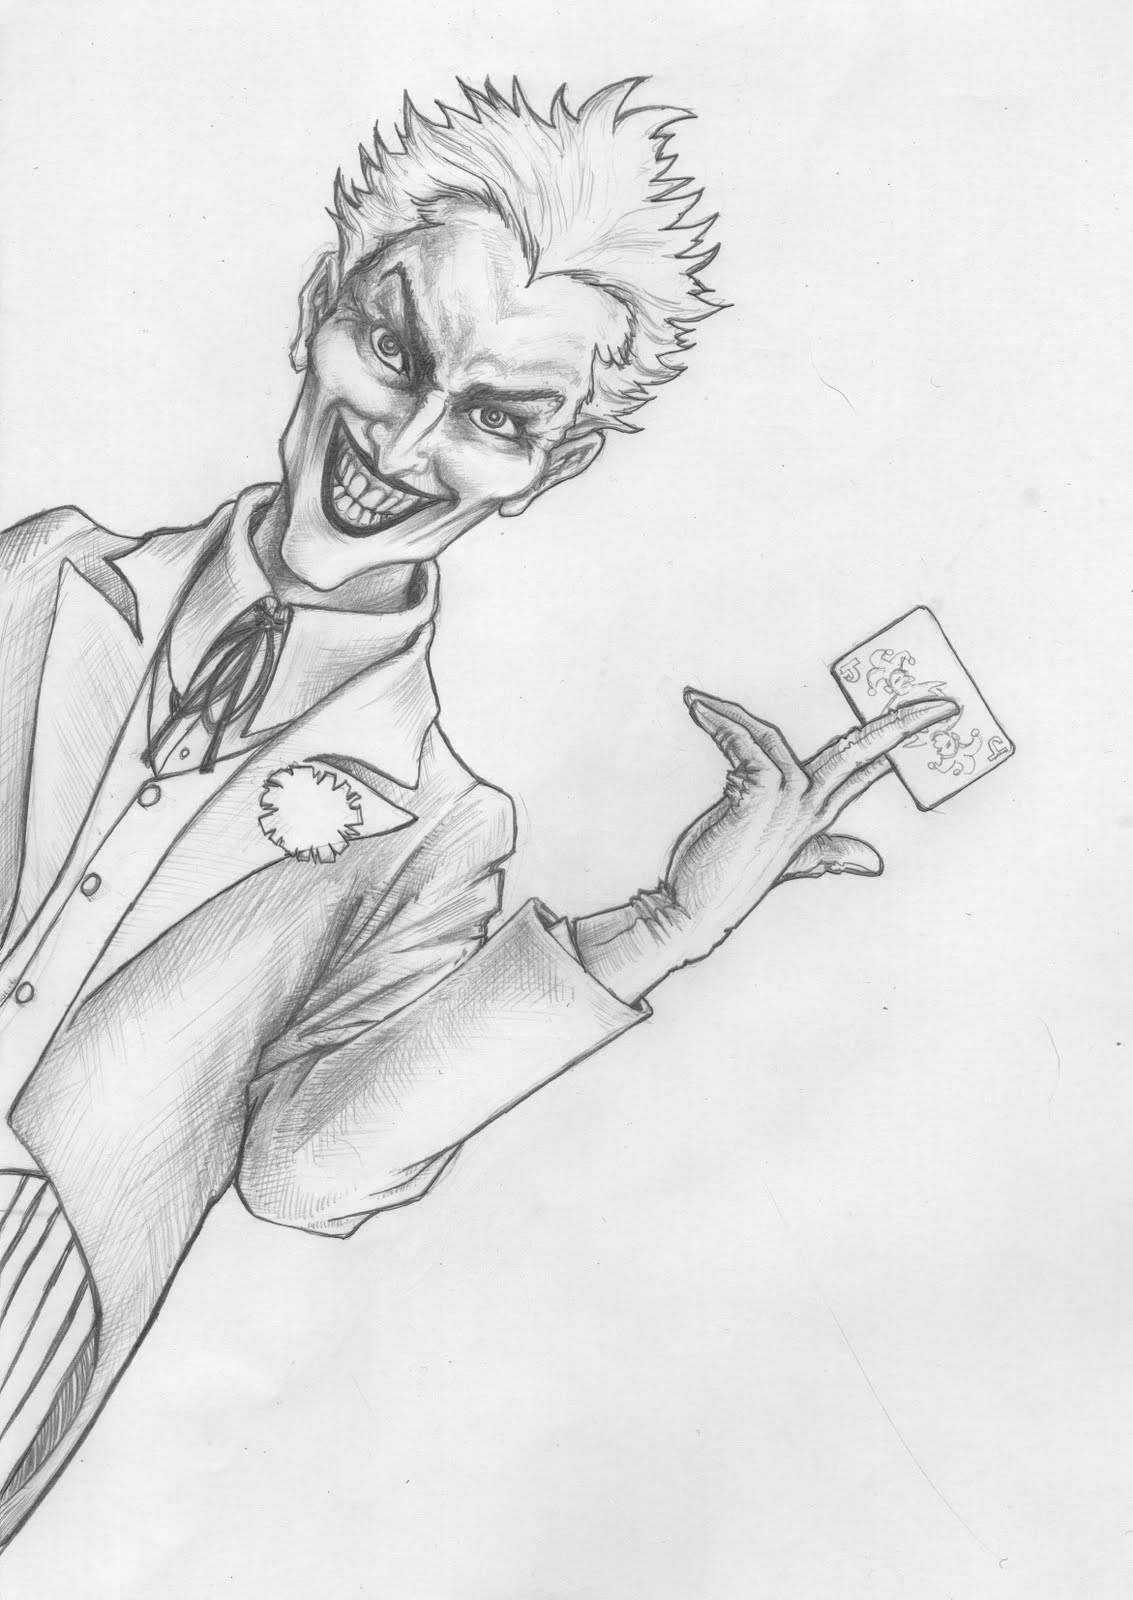 puredaft delineavit: The Joker